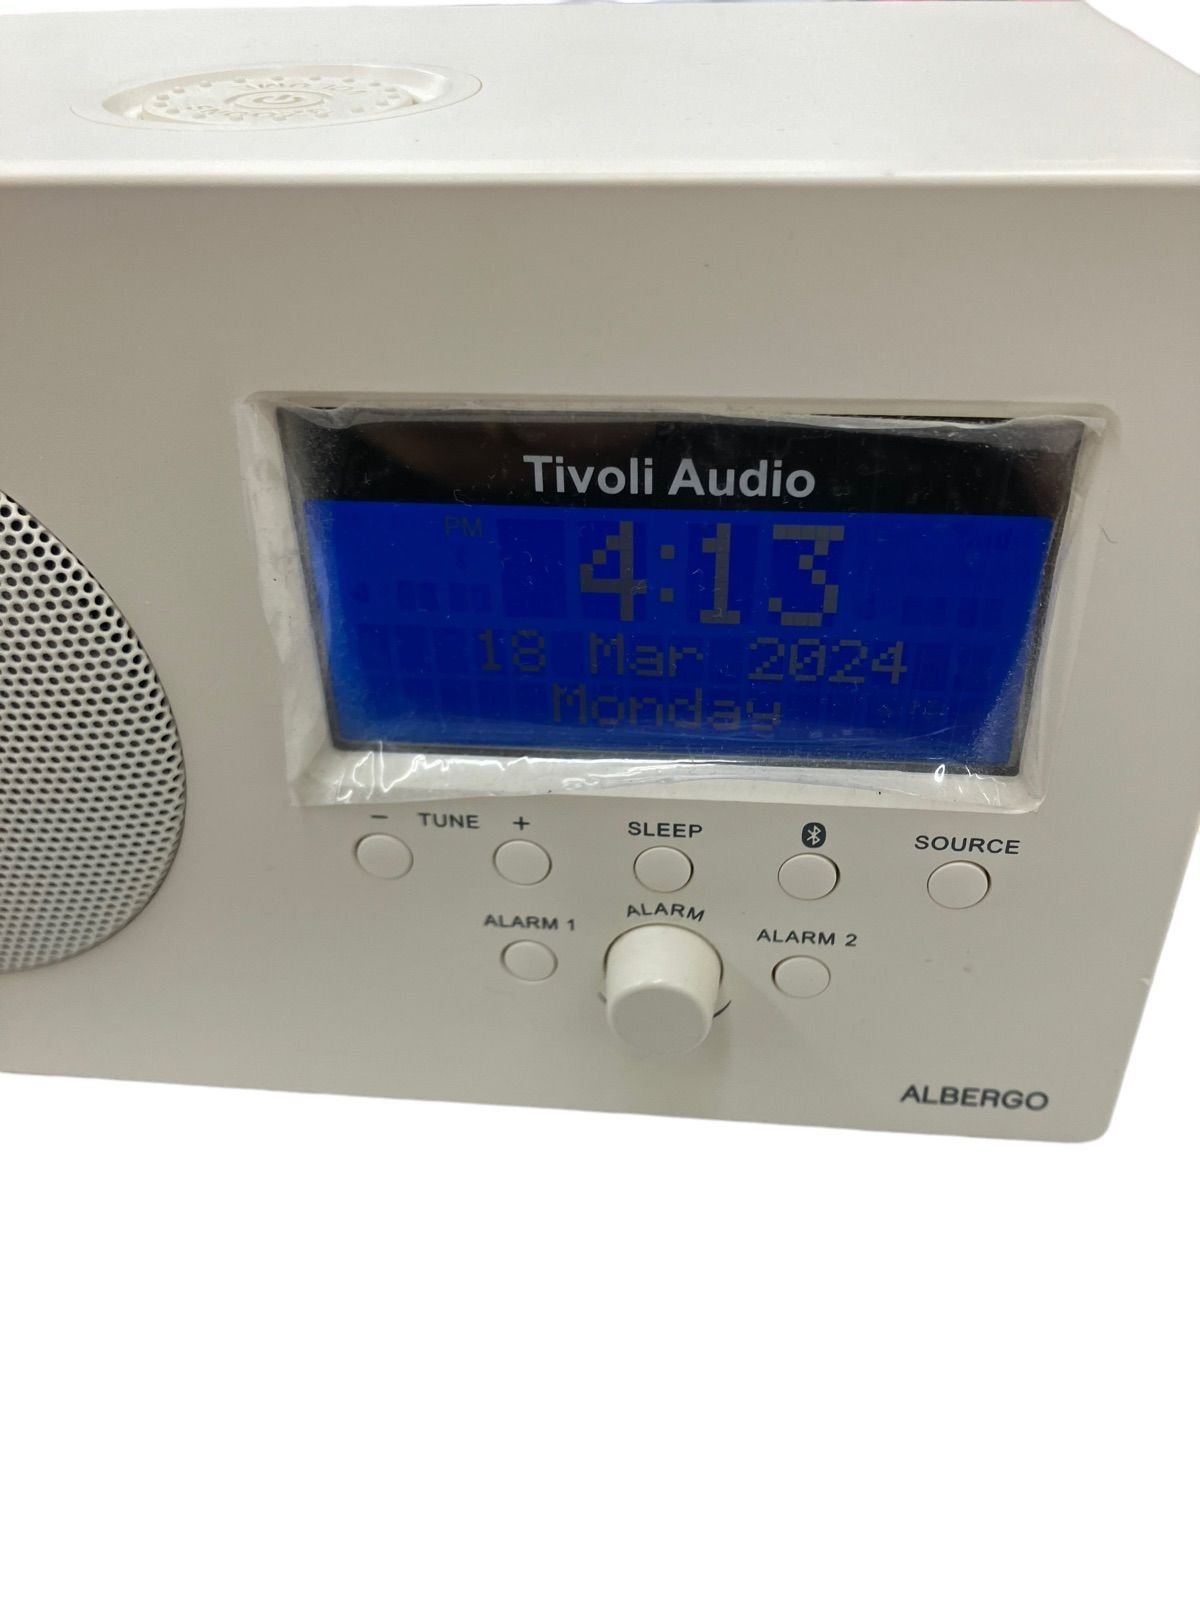 Tivoli Audio Albergo チボリオーディオ アルベルゴ ラジオ - メルカリ